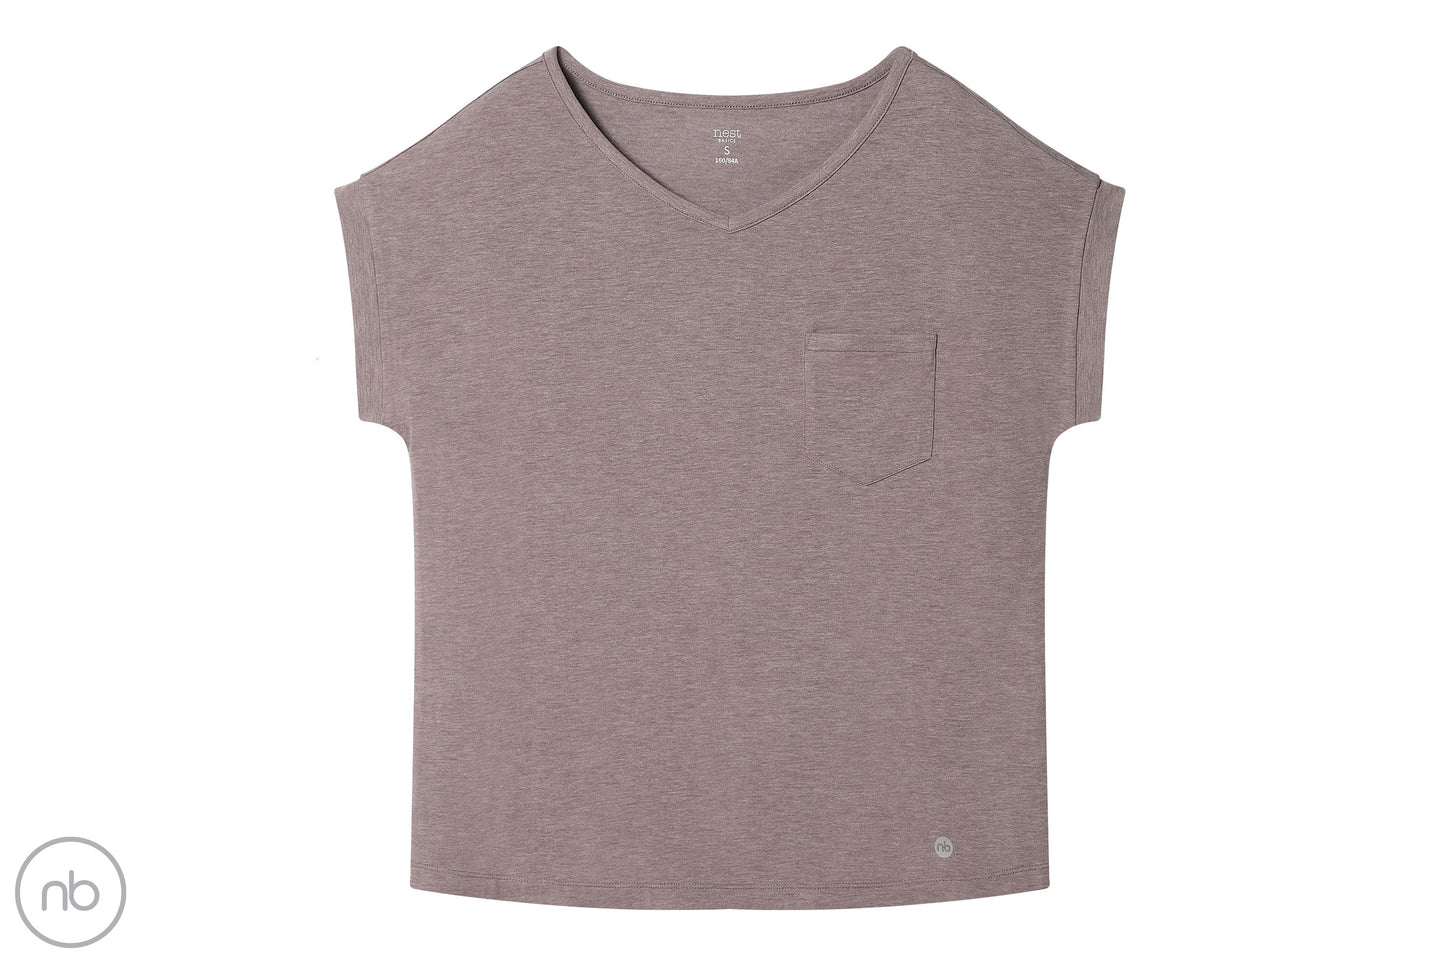 Basics Women's T-Shirt (Bamboo) - Elderberry